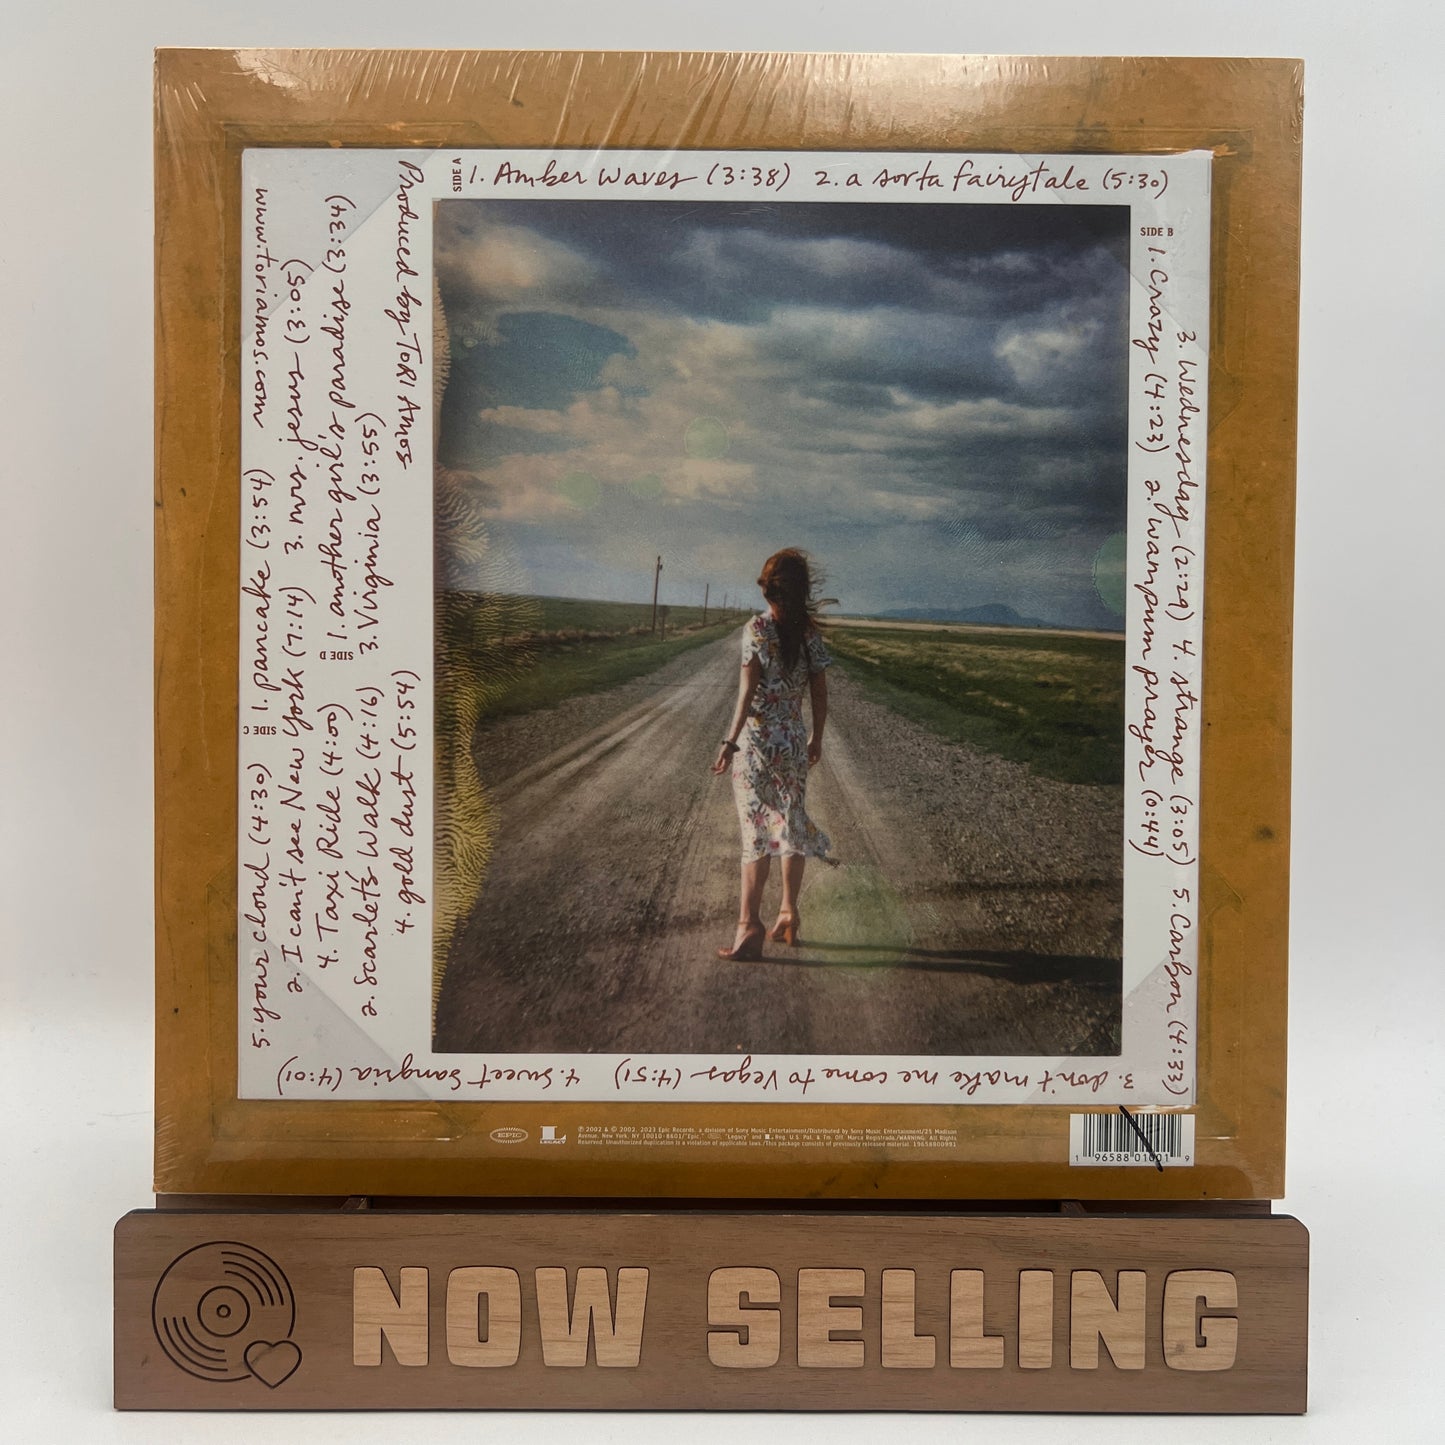 Tori Amos - Scarlet's Walk Vinyl LP SEALED Remastered Red Amazon Exclusive